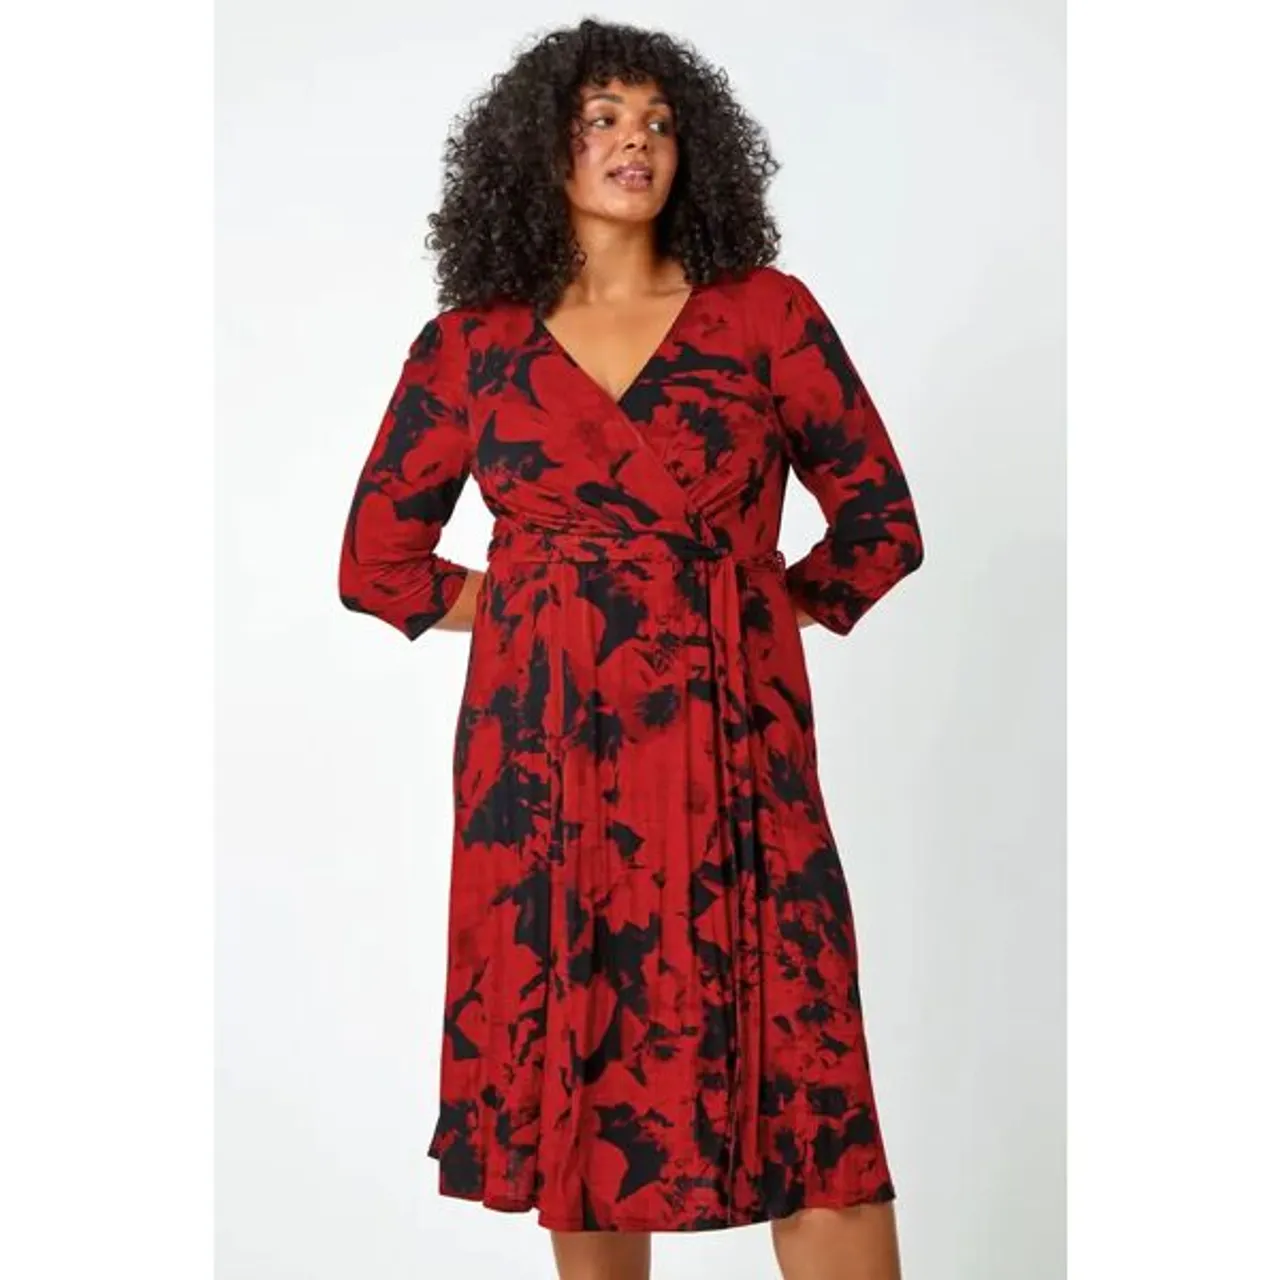 Roman Curve Roman Originals Curve Floral Wrap Stretch Midi Dress in Red - Size 2224 2224 female